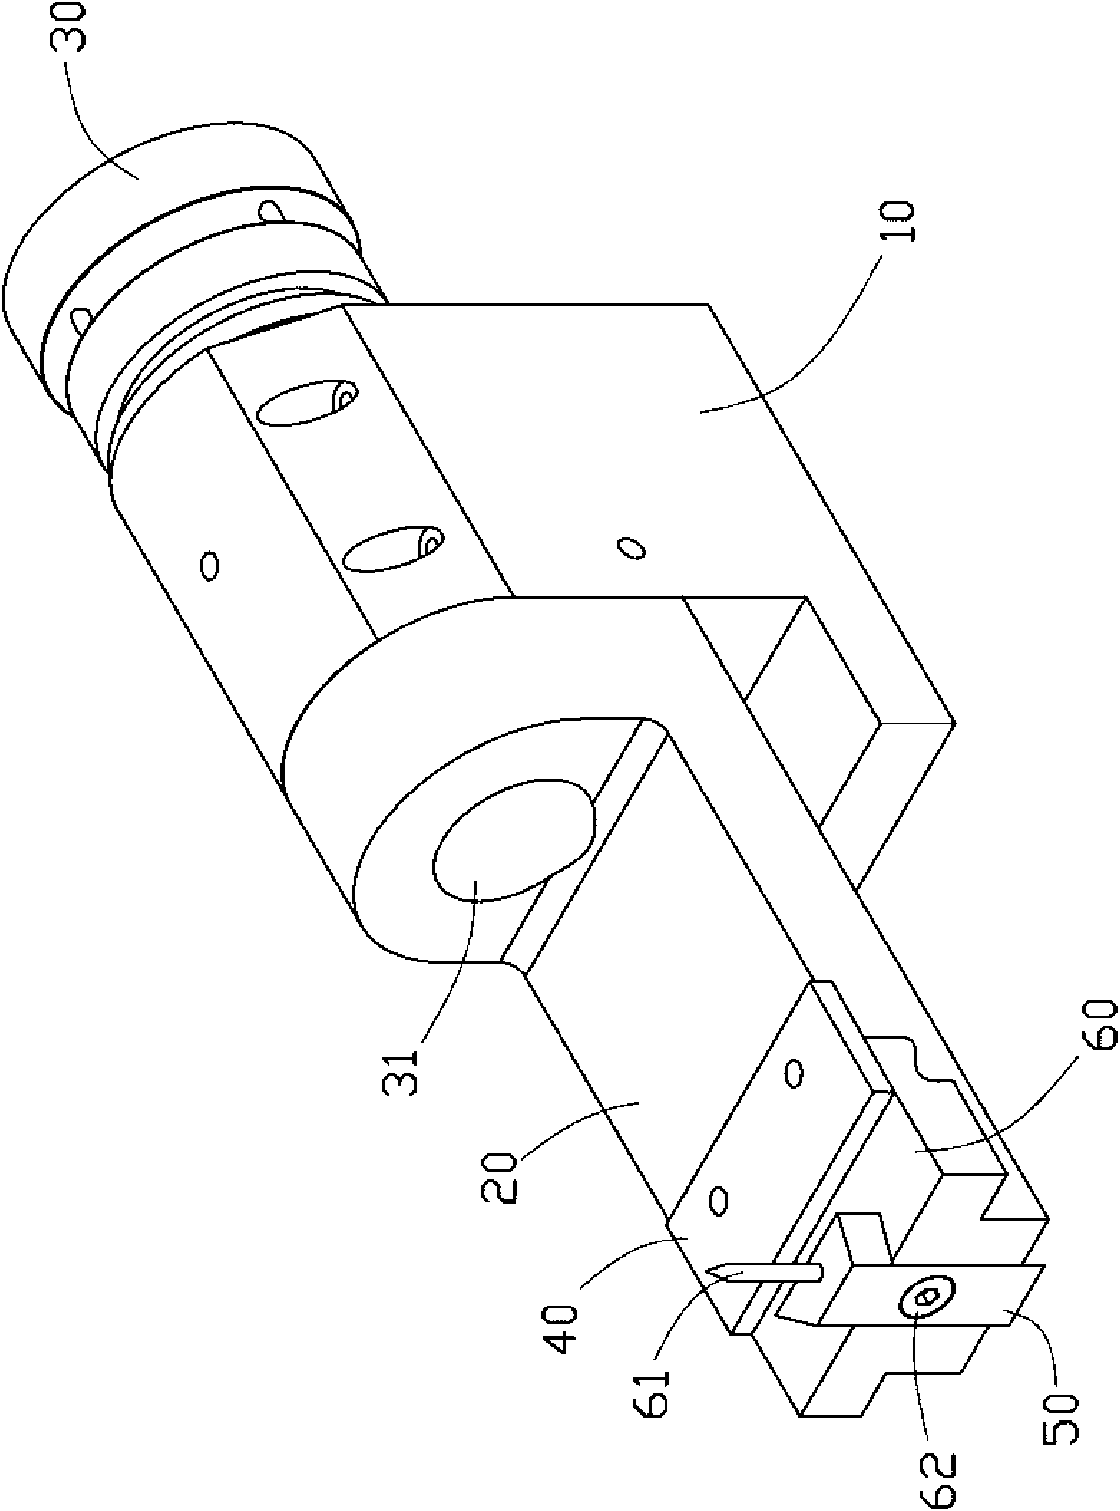 Grinding wheel arc dresser